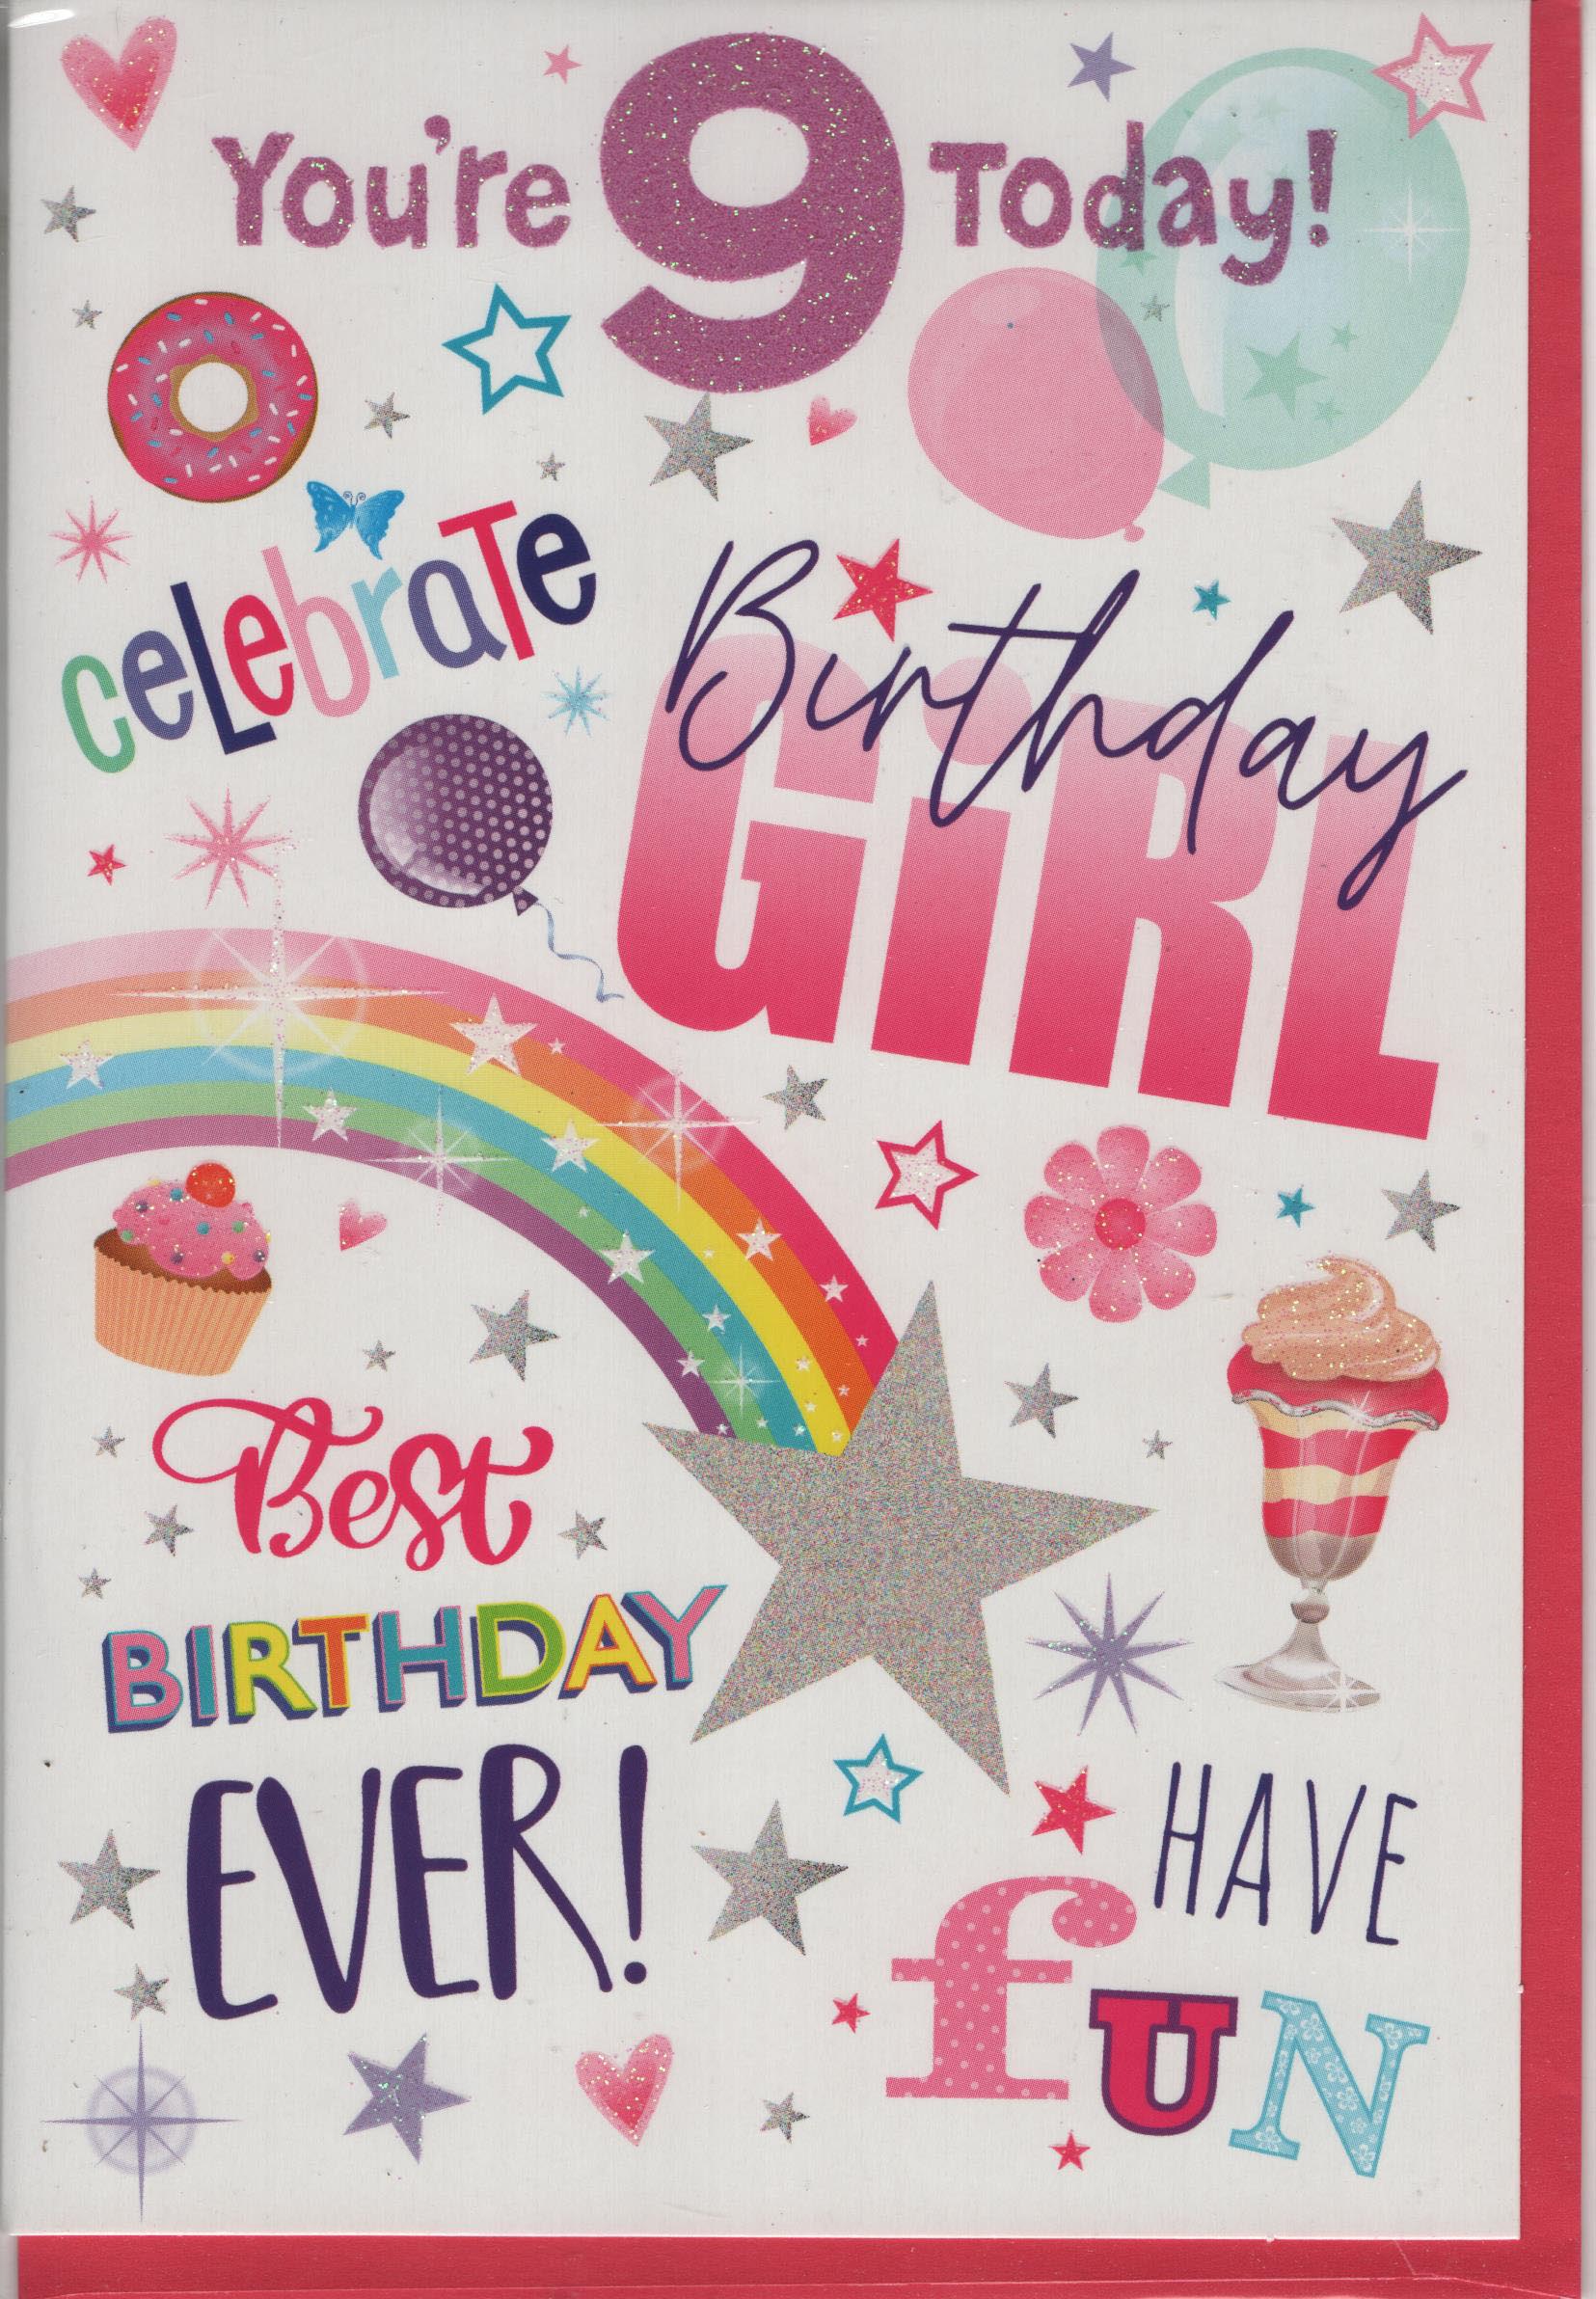 You're 9 Today! Celebrate Burthday Girl